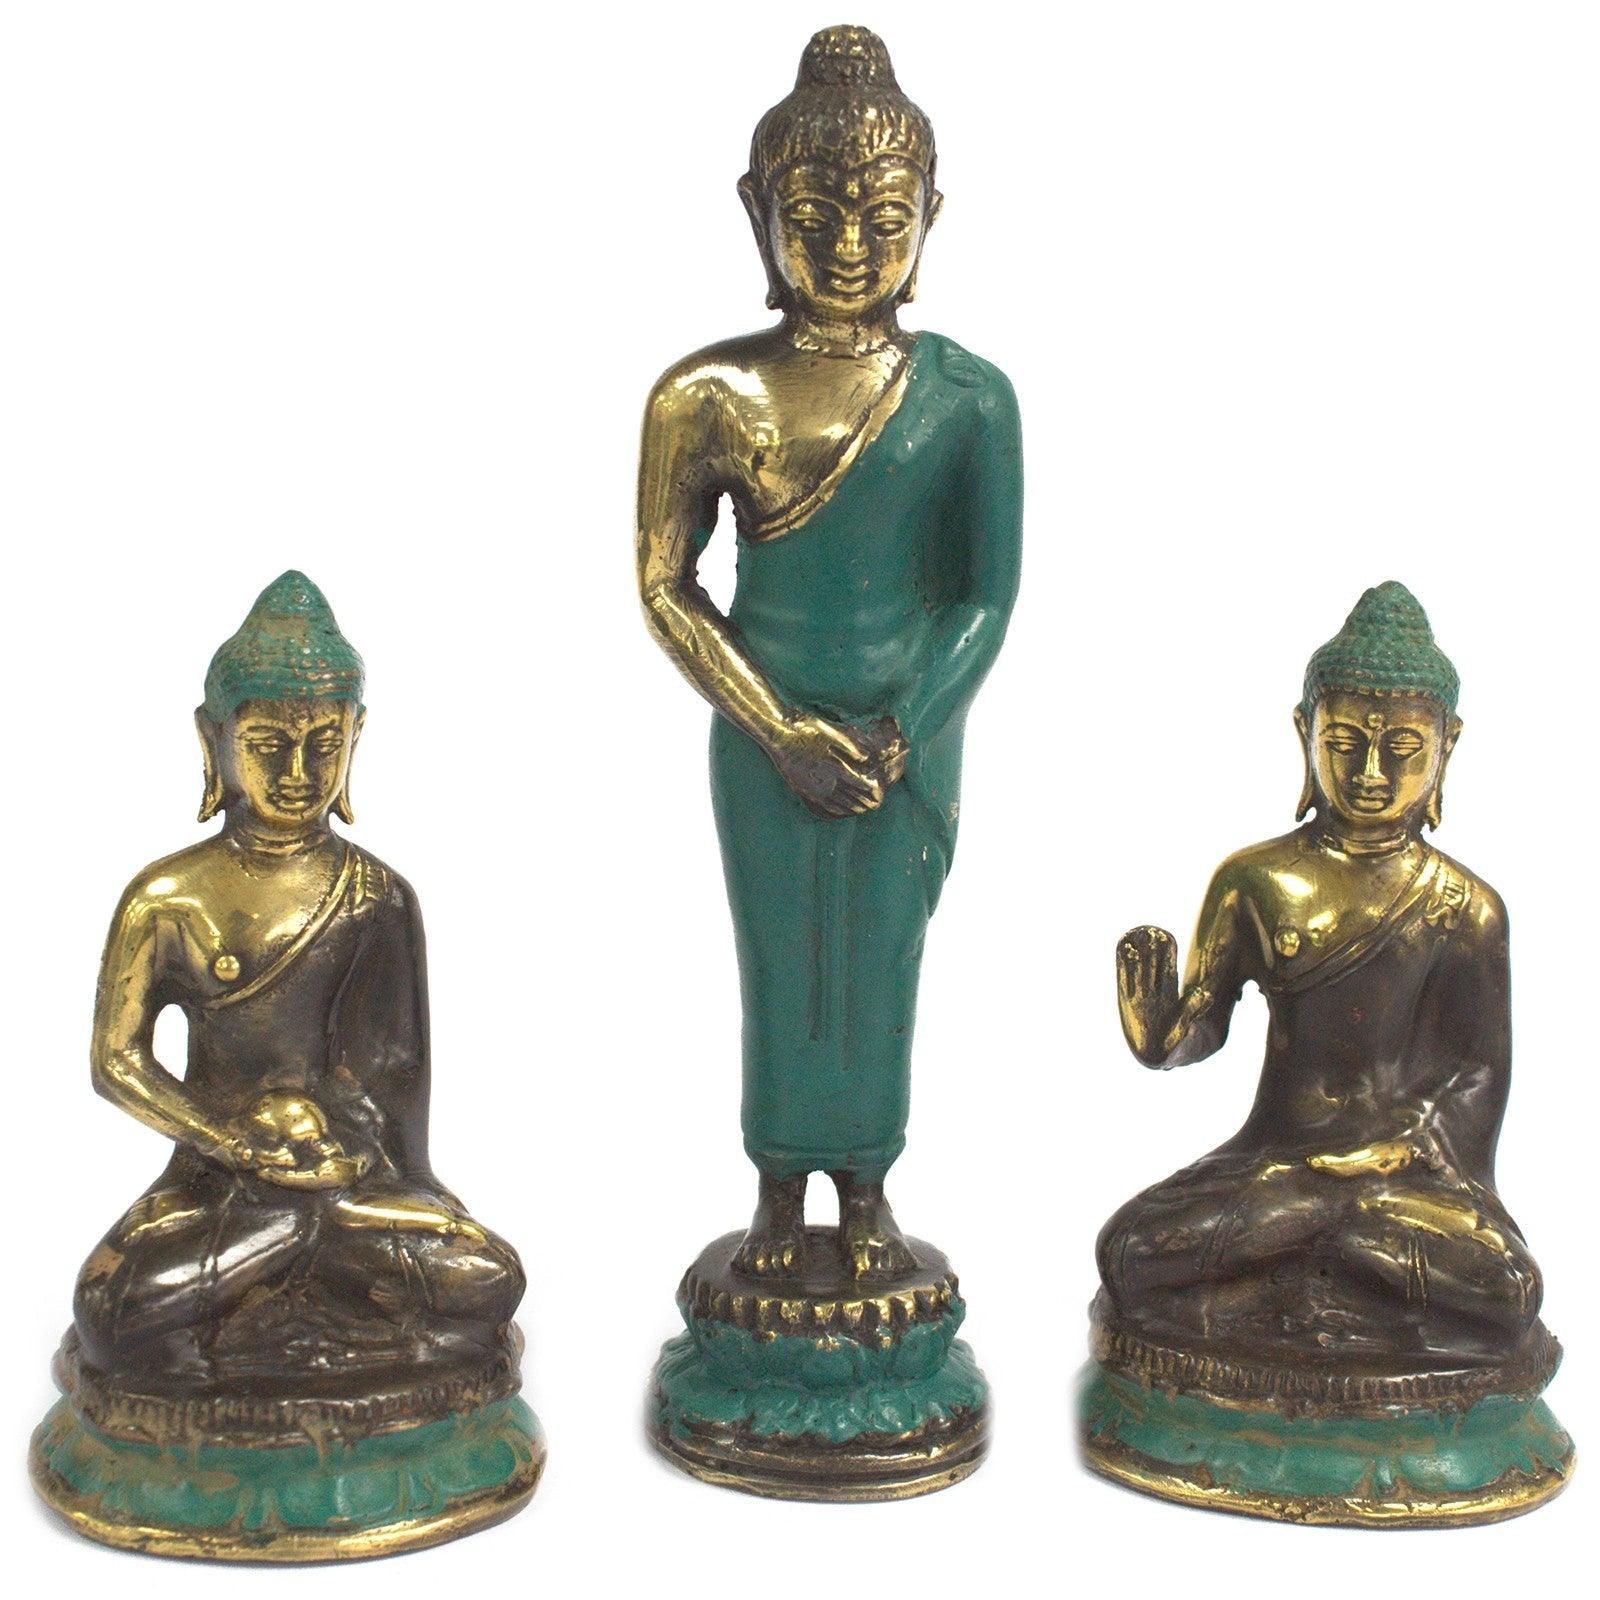 Medium Size Standing Buddha - Charming Spaces